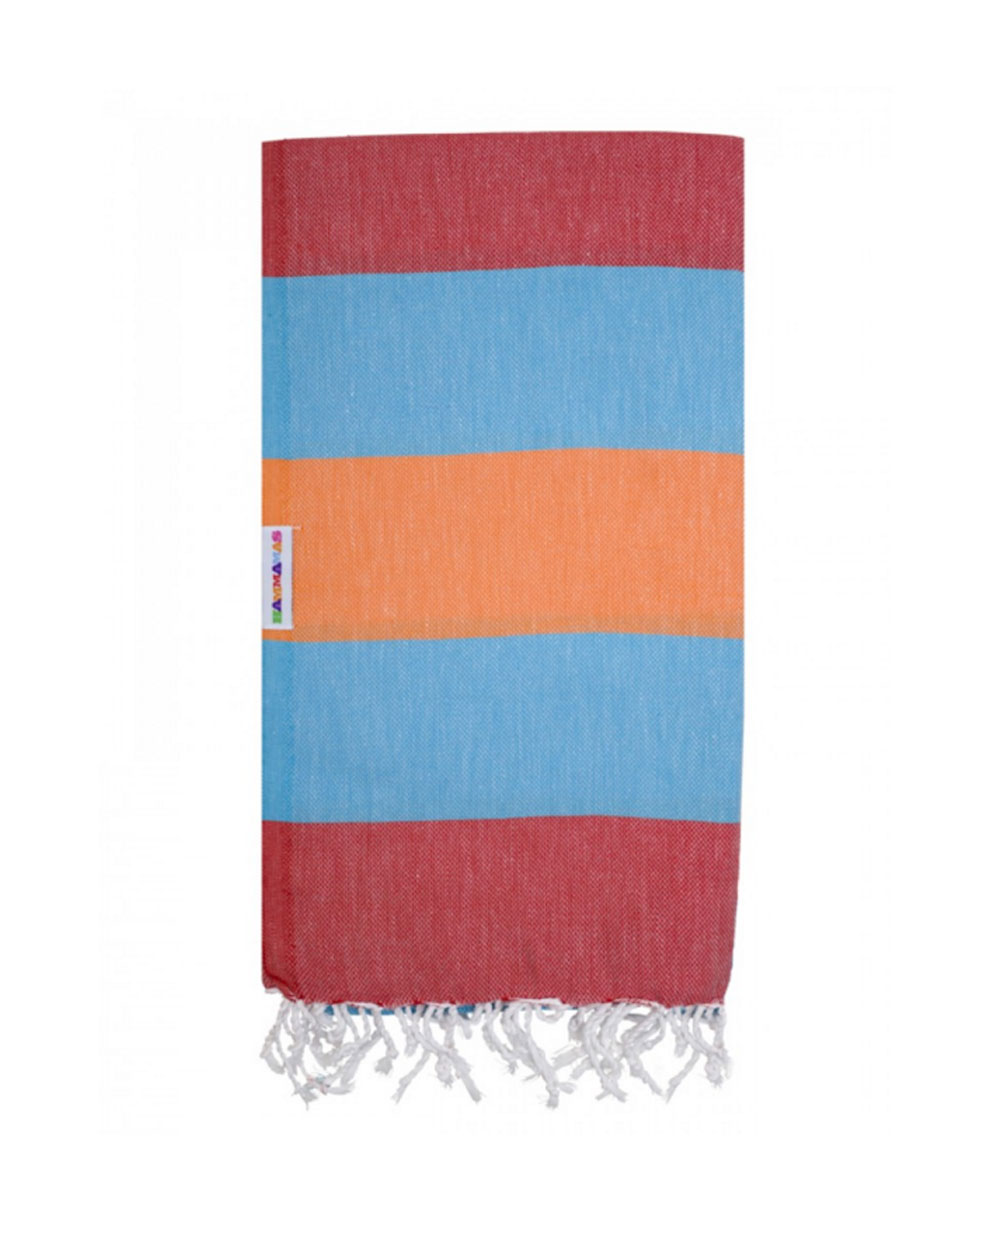 Hammamas towel, $45